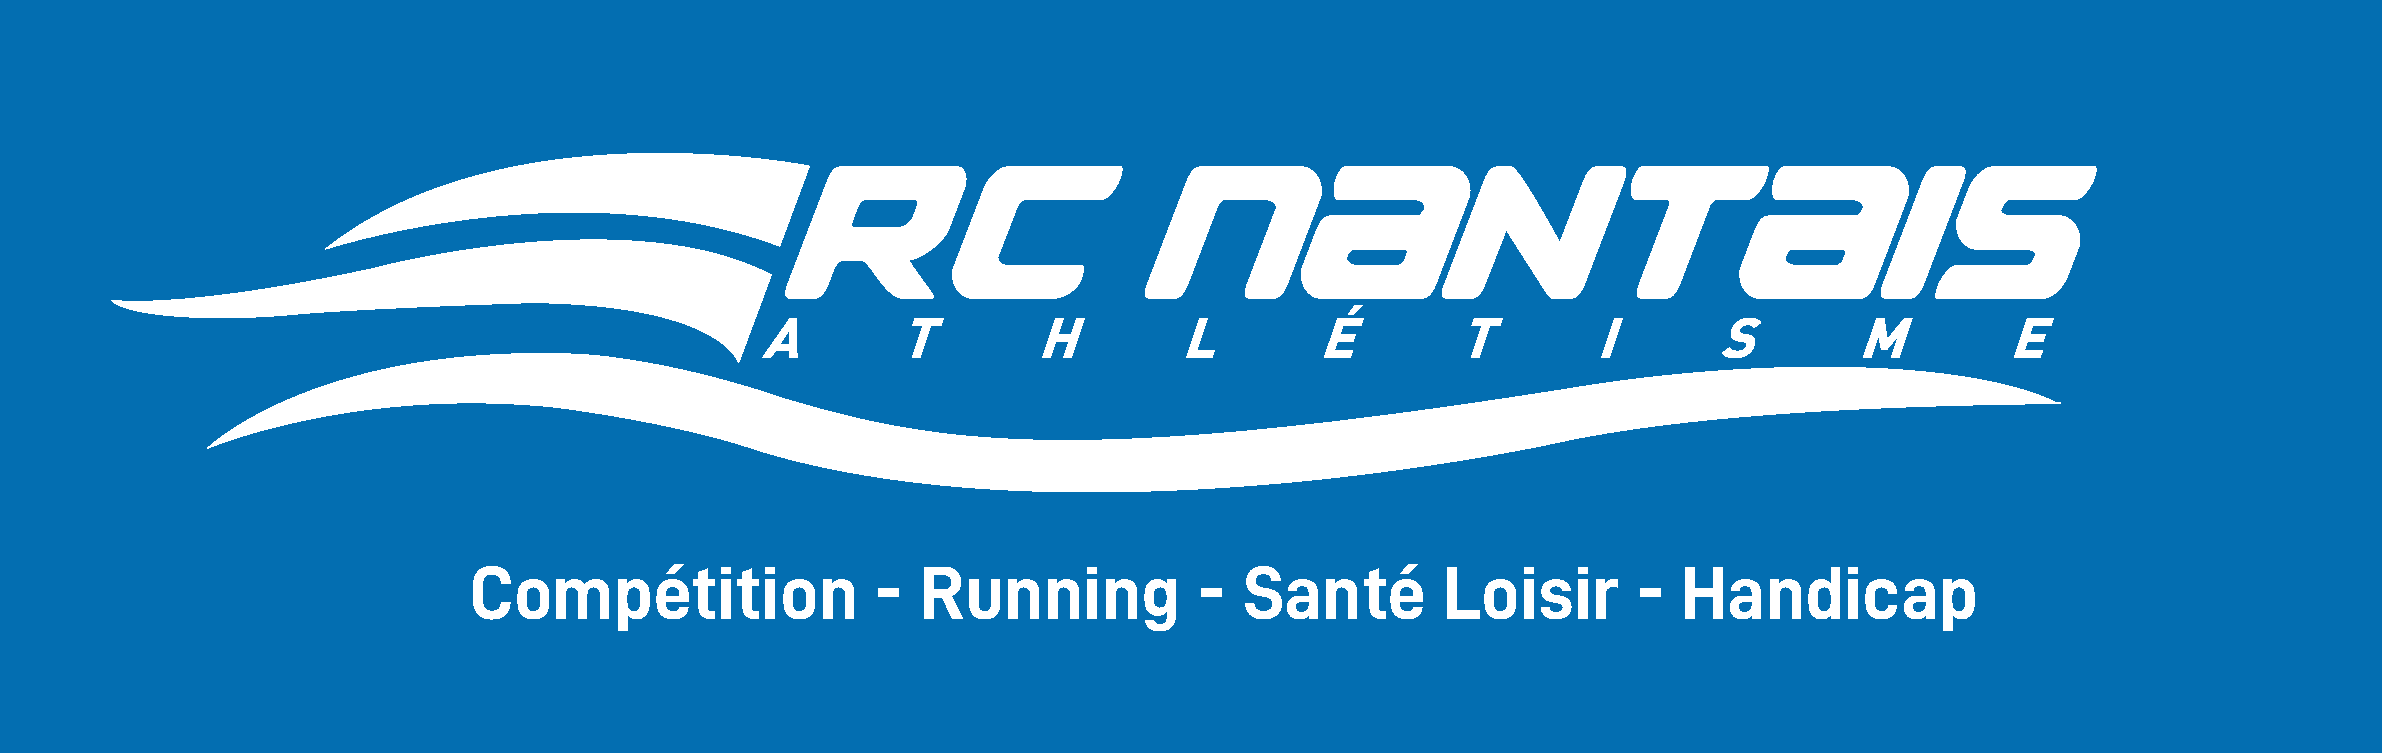 Logo RCN banner